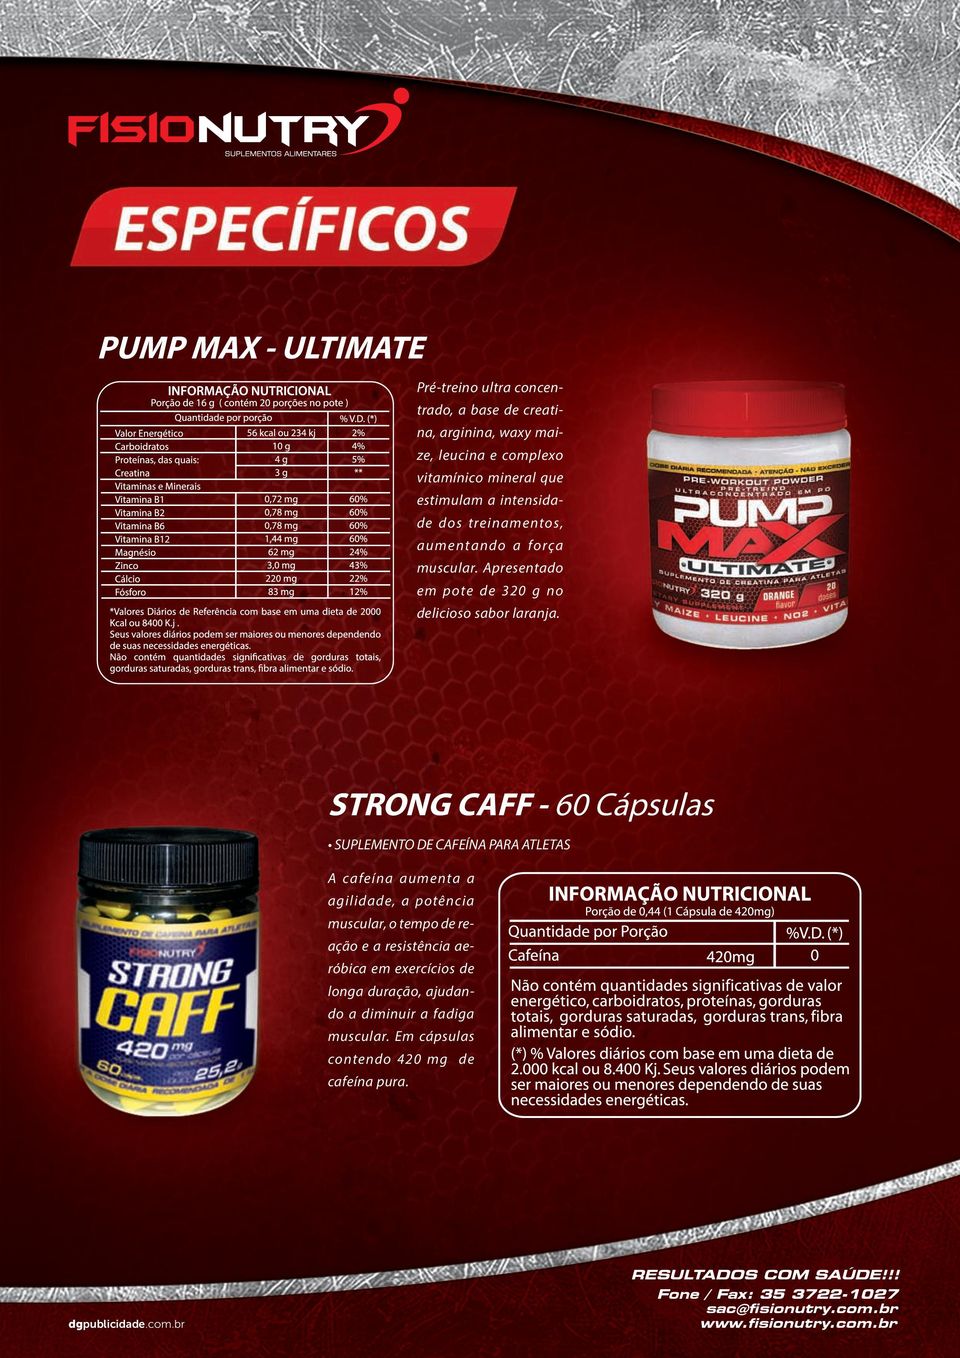 STRONG CAFF - 60 Cápsulas SUPLEMENTO DE CAFEÍNA PARA ATLETAS A cafeína aumenta a agilidade, a potência muscular, o tempo de reação e